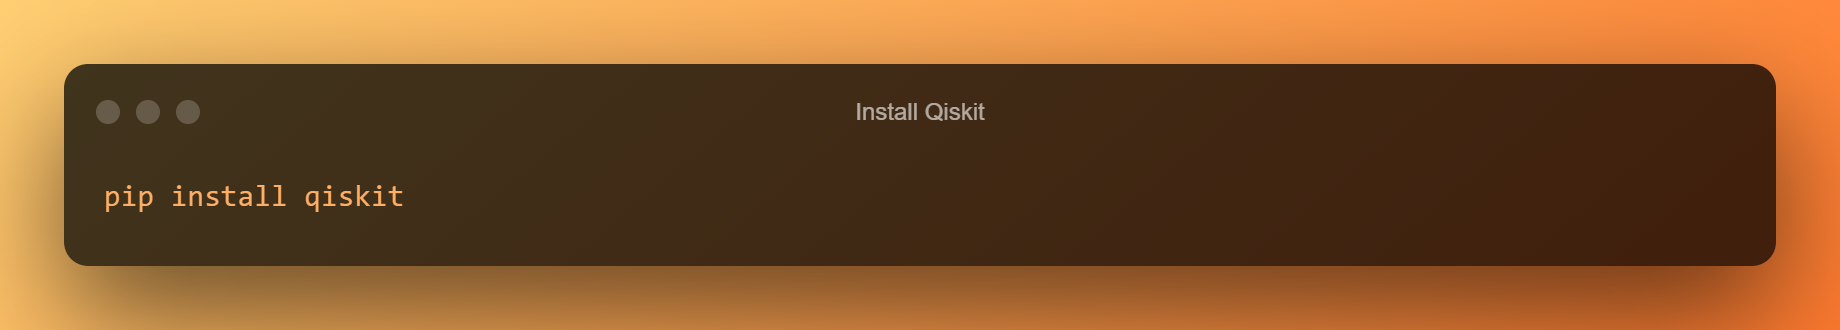 Install Qiskit